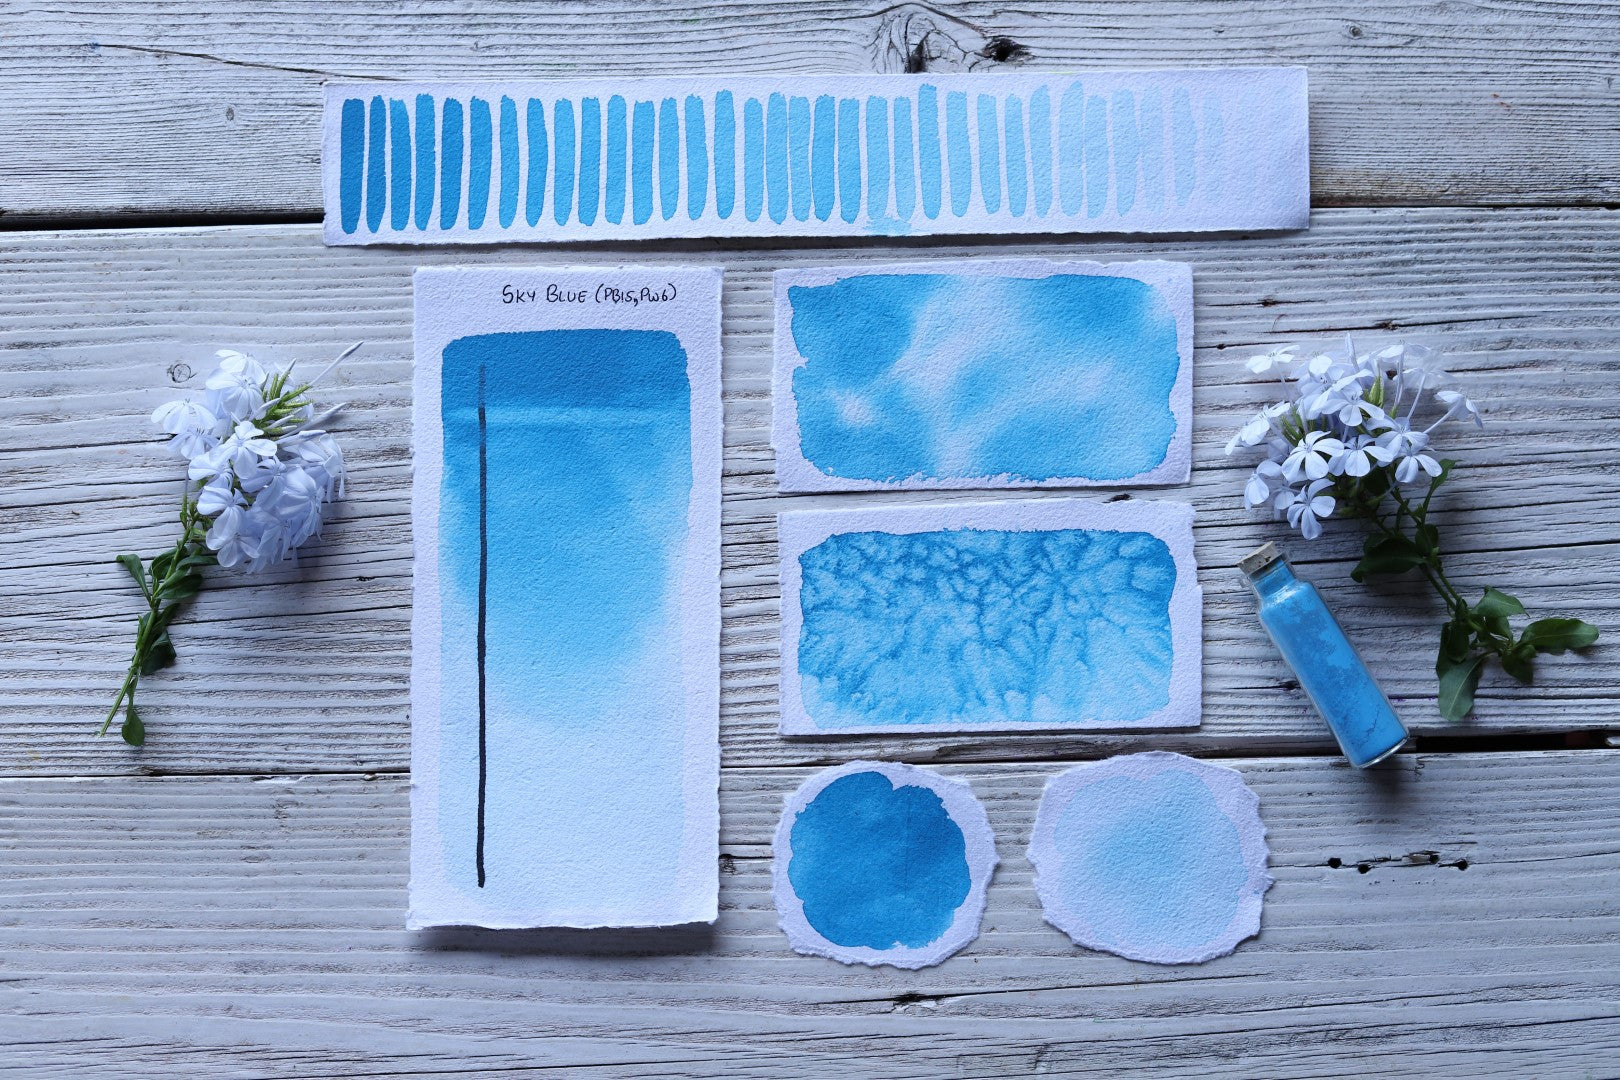 blue-pine-arts-premium-art-supplies-handmade-artisanal-watercolor-paints-professional-watercolors-handcrafted-sky-blue-6063.jpg